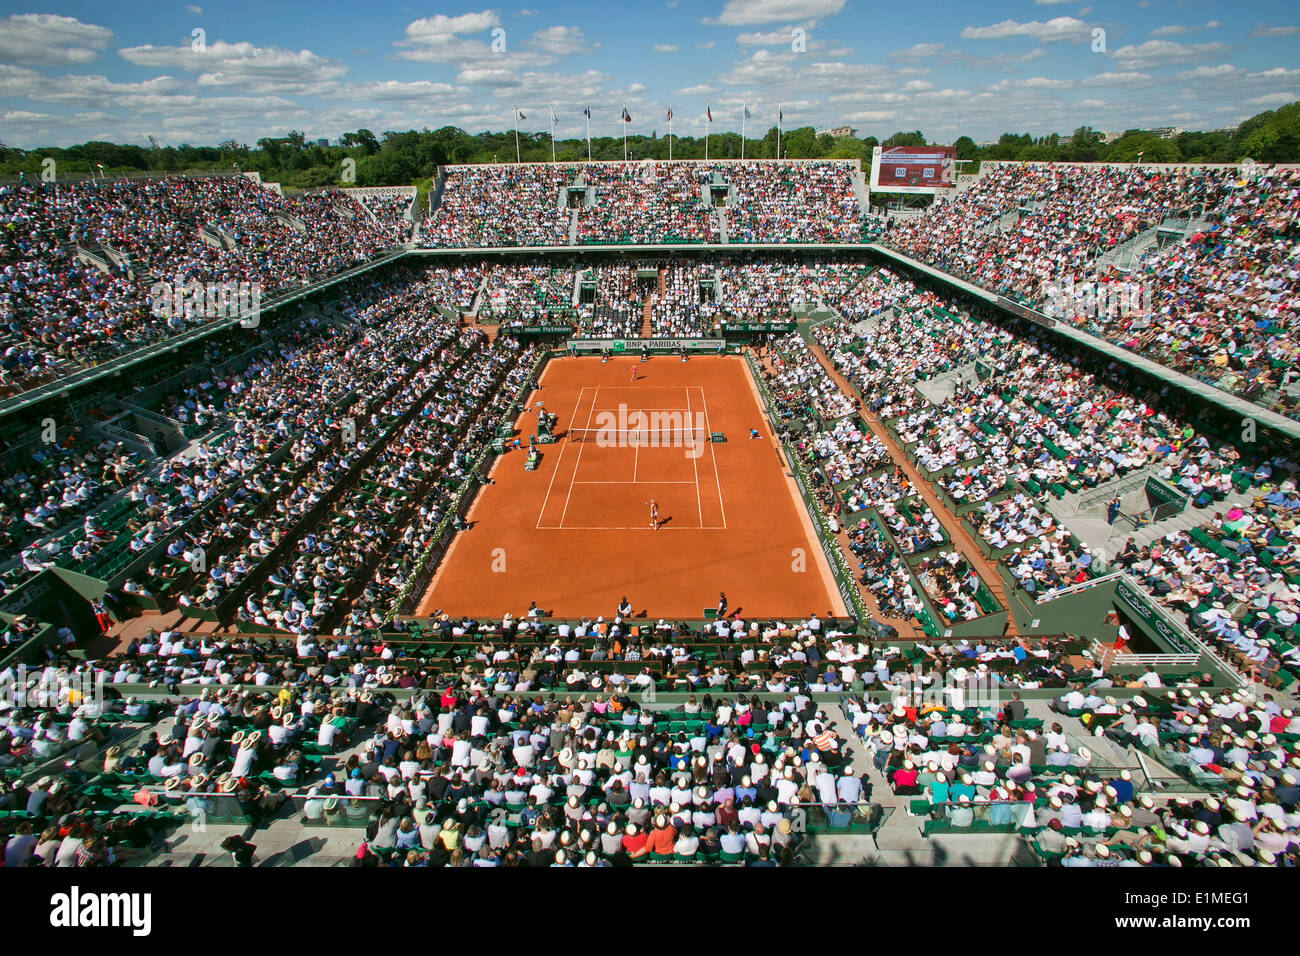 paris-france-05th-june-2014-tennis-french-open-roland-garros-court-E1MEG1.jpg